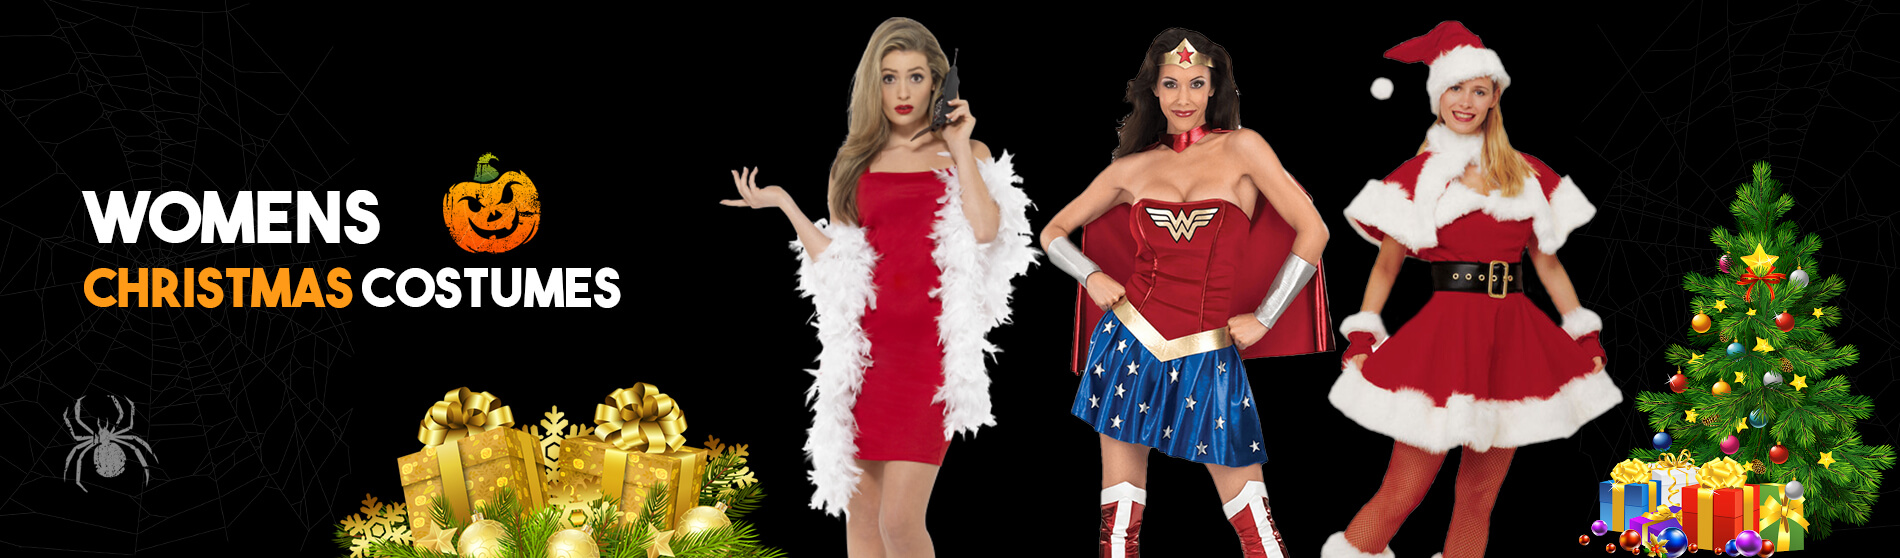 Glendale Halloween : womens-christmas-costumes